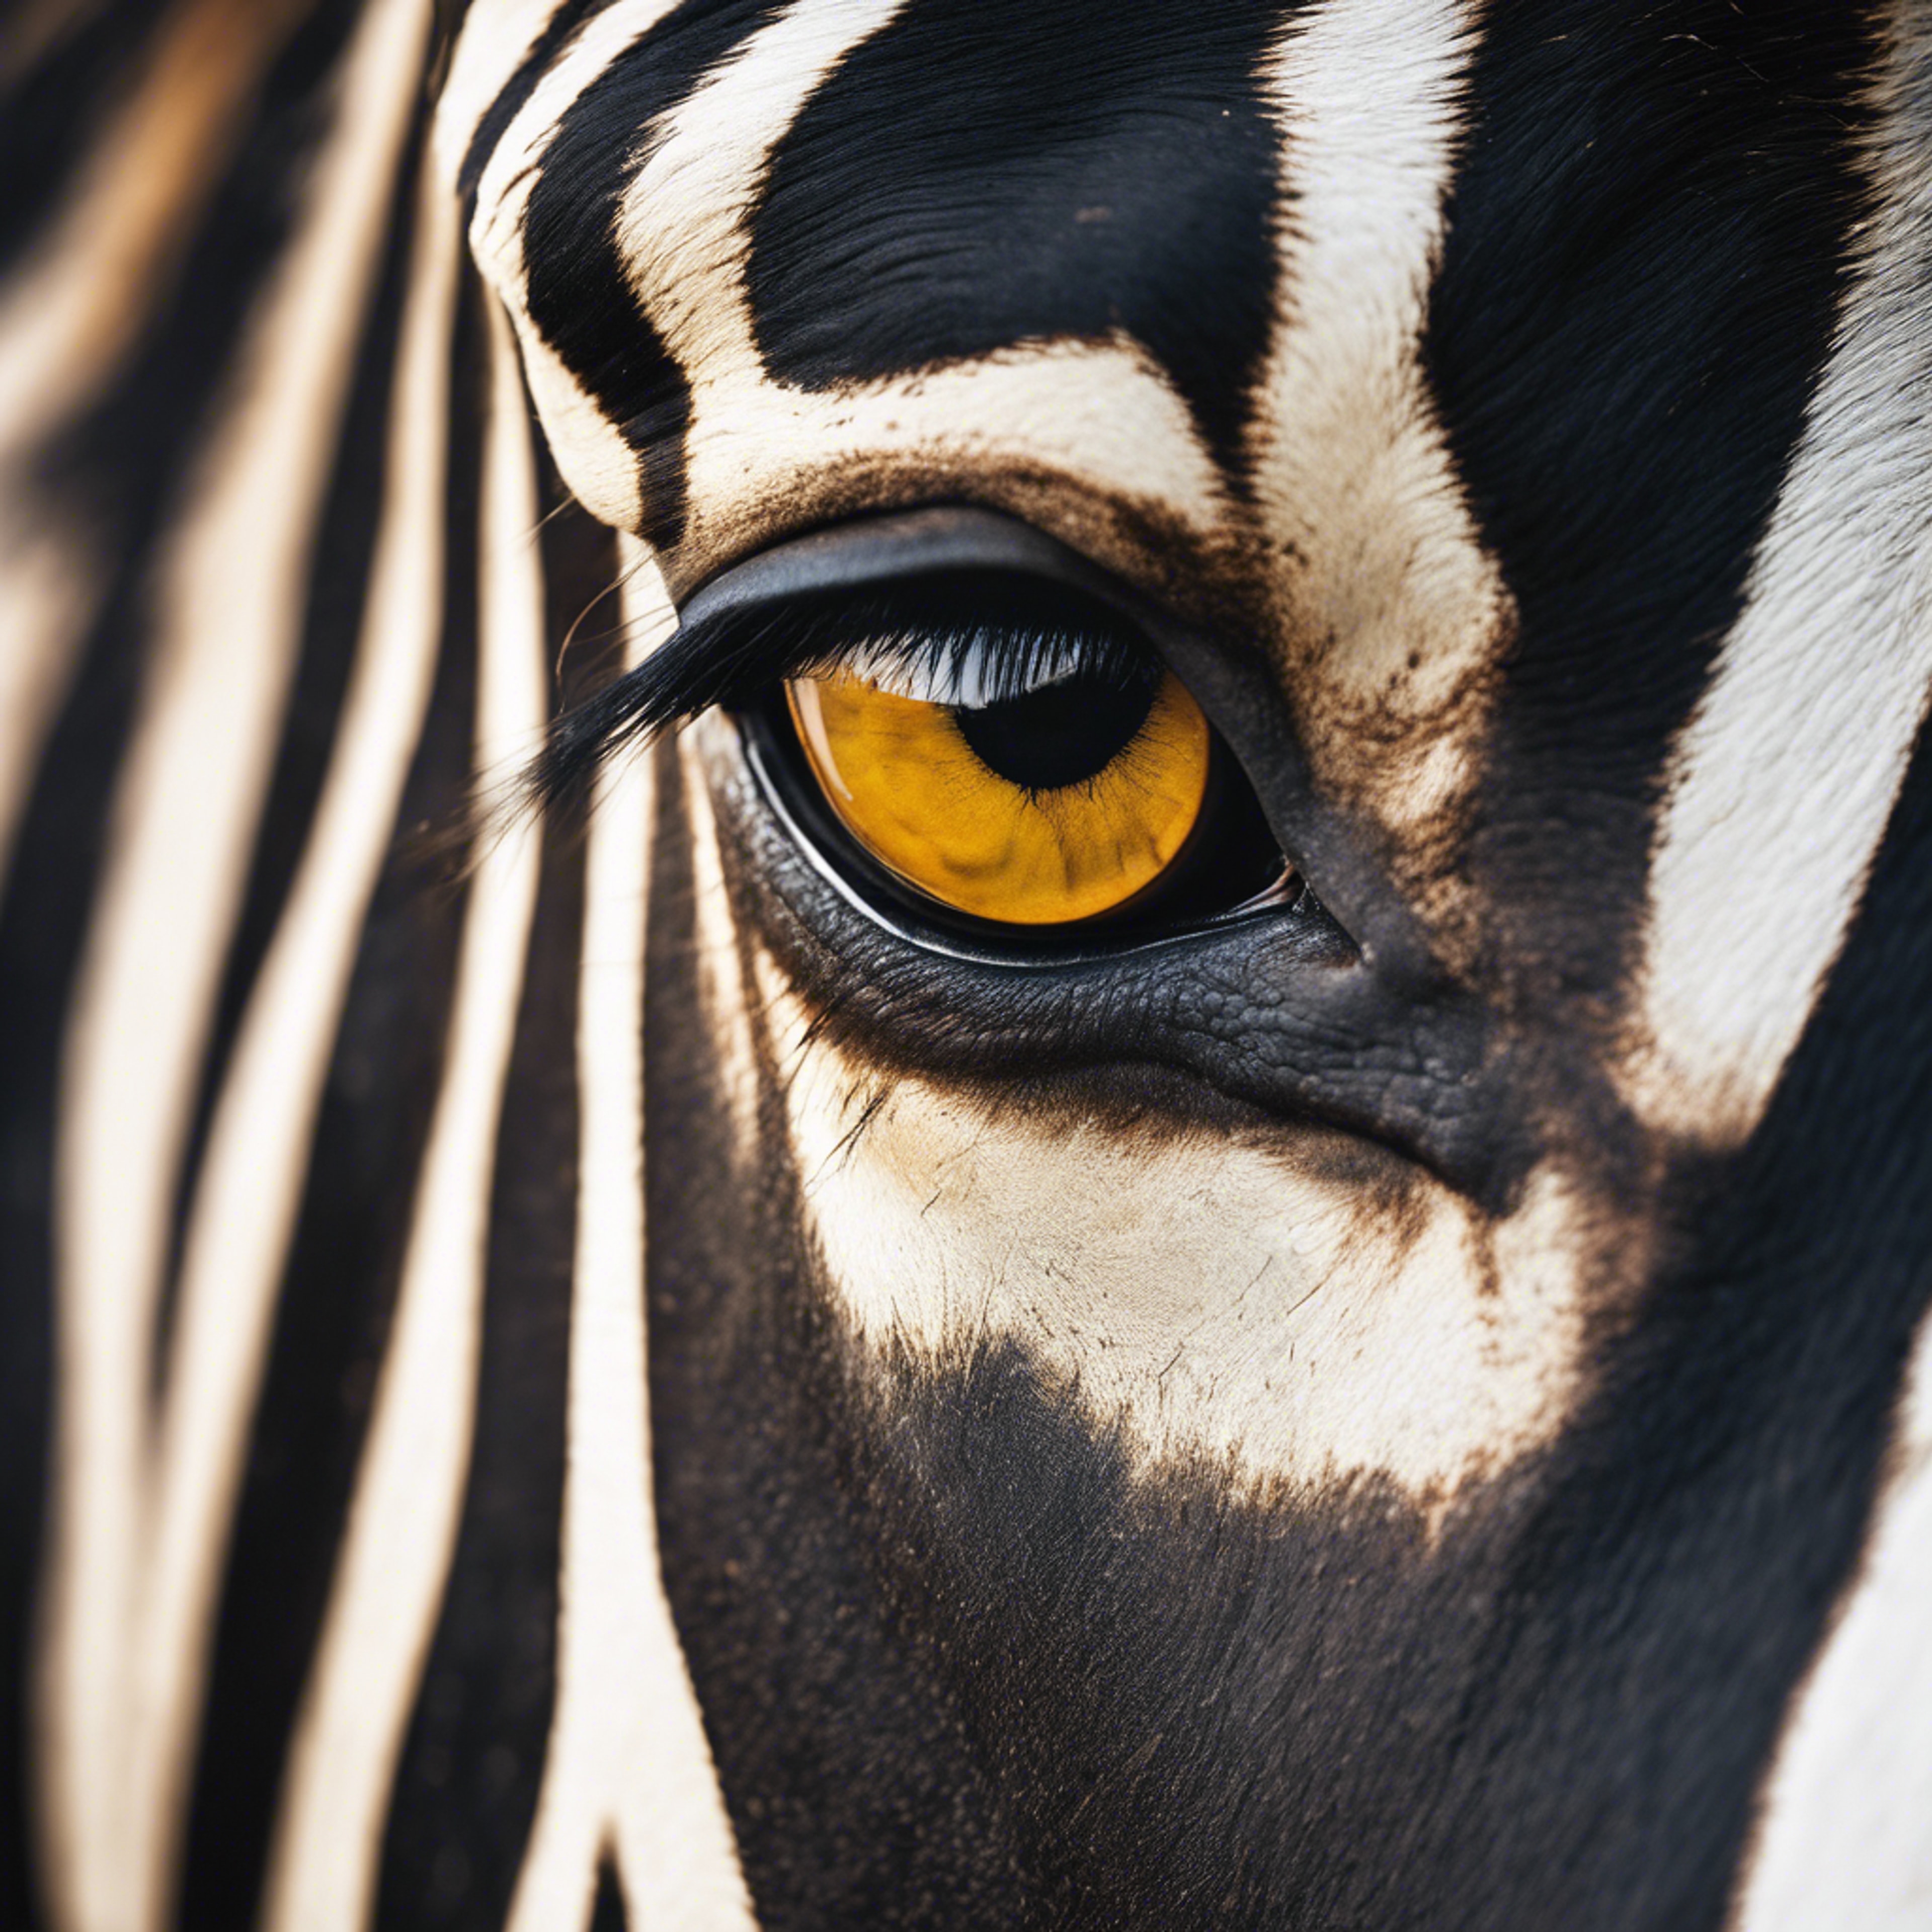 A closeup of a zebra's eye, showcasing its beautiful black and yellow striped pattern.壁紙[50ee4a2668b0446d82c3]